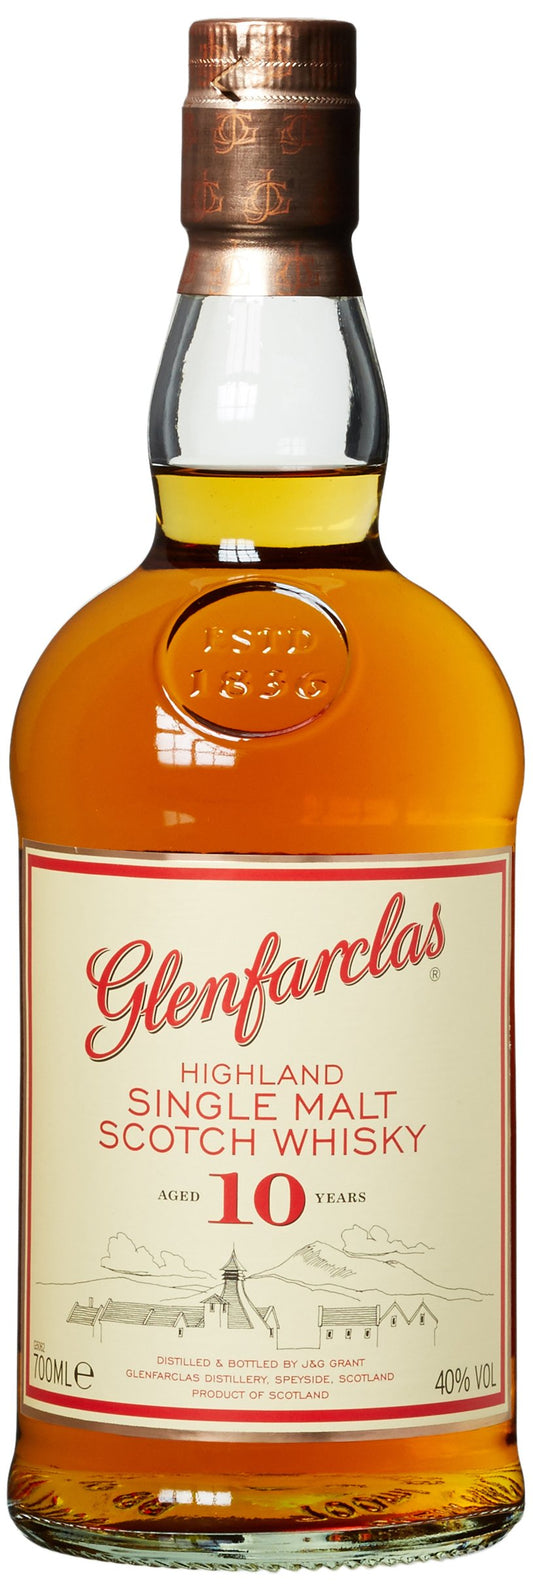 Glenfarclas - Aged 10 Years - Single Malt Scotch Whisky